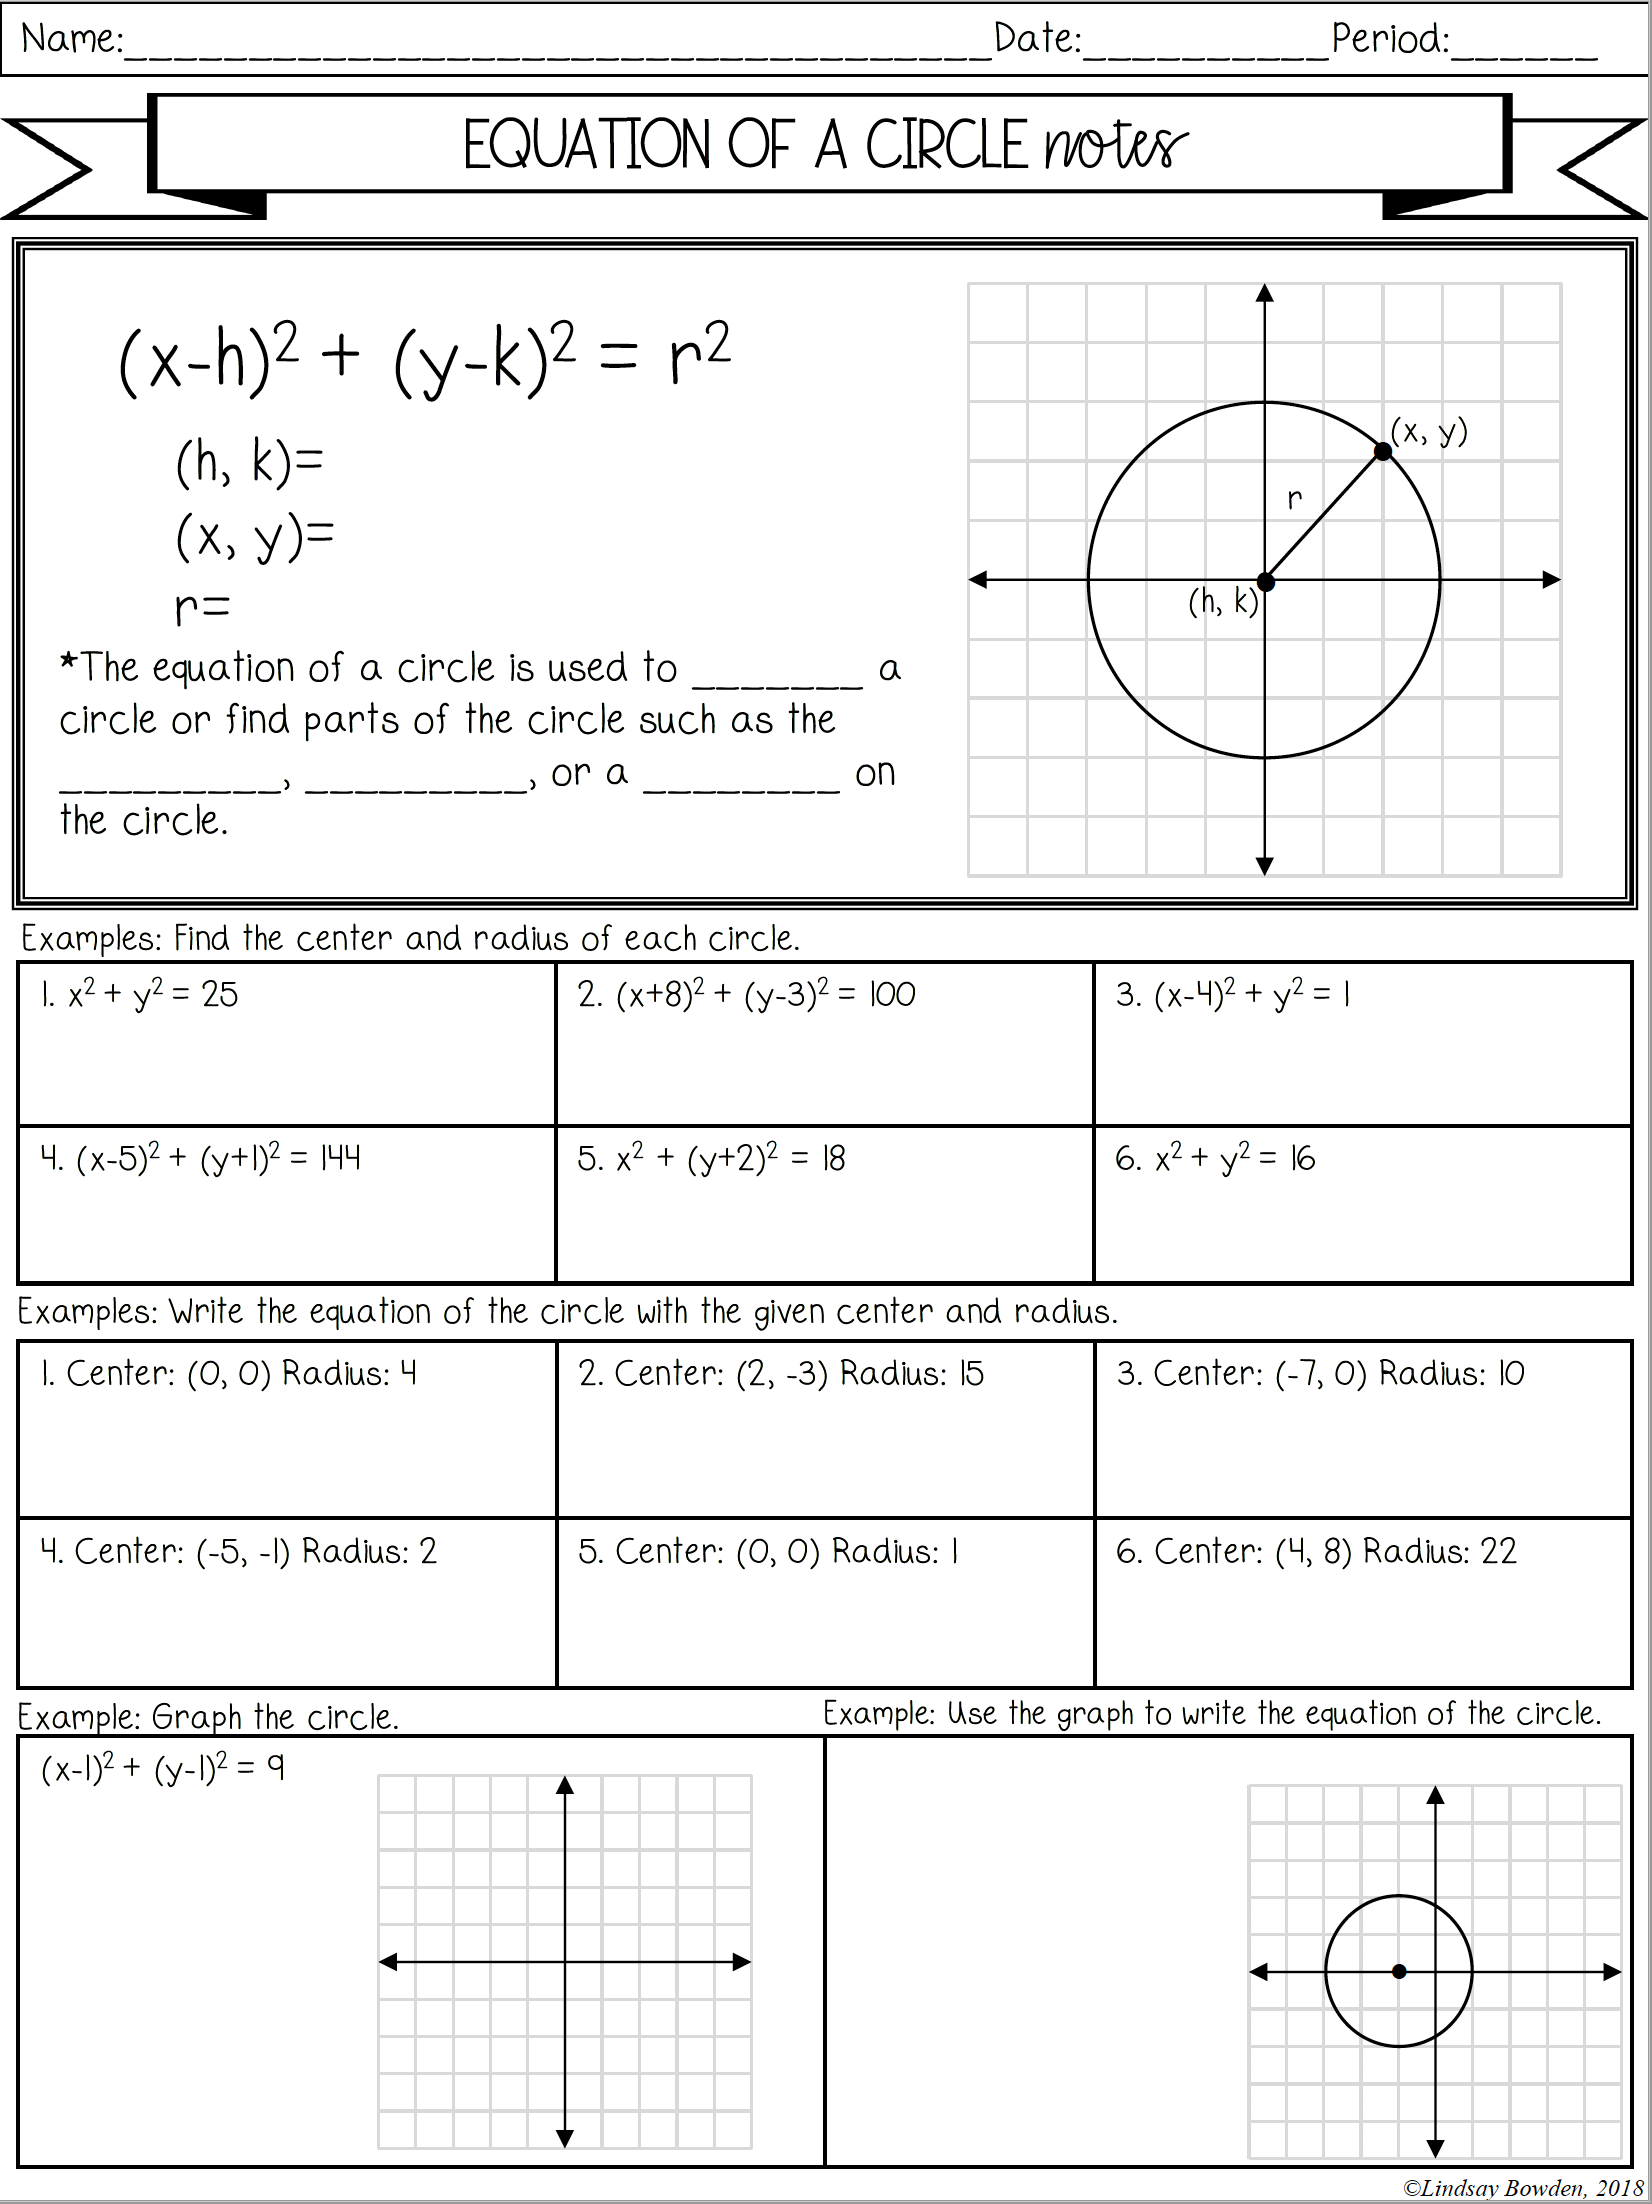 Equation of a Circle Notes and Worksheets - Lindsay Bowden For Equations Of Circles Worksheet